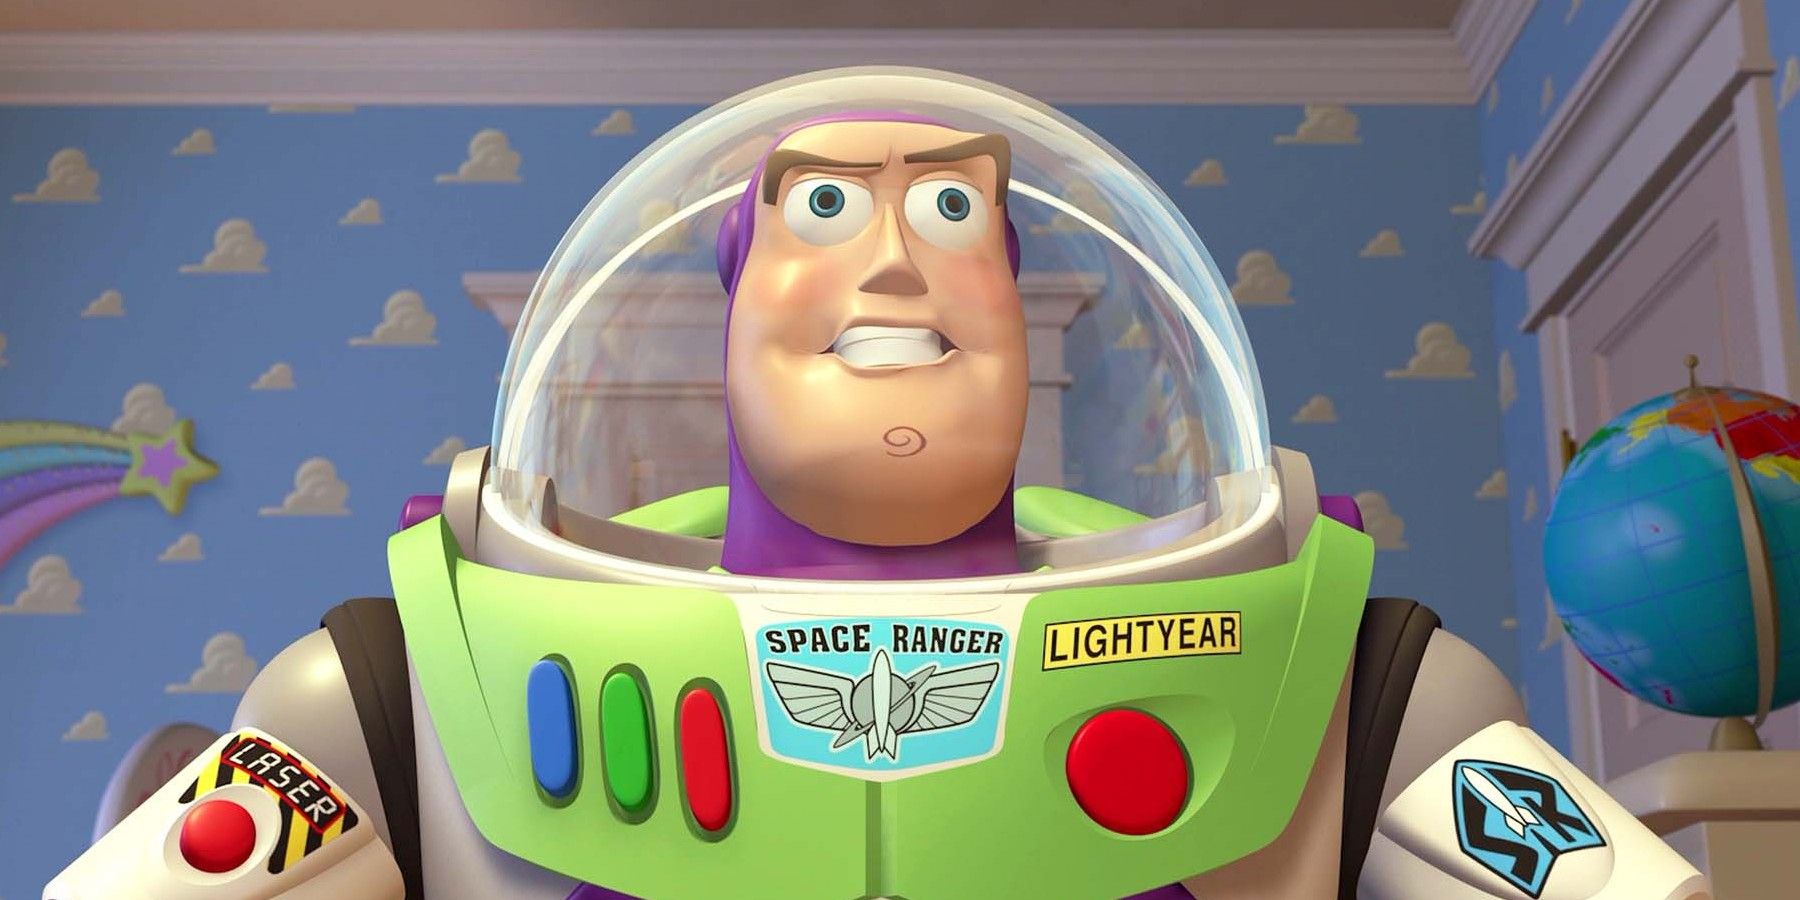 Buzz Lightyear posing in Toy Story